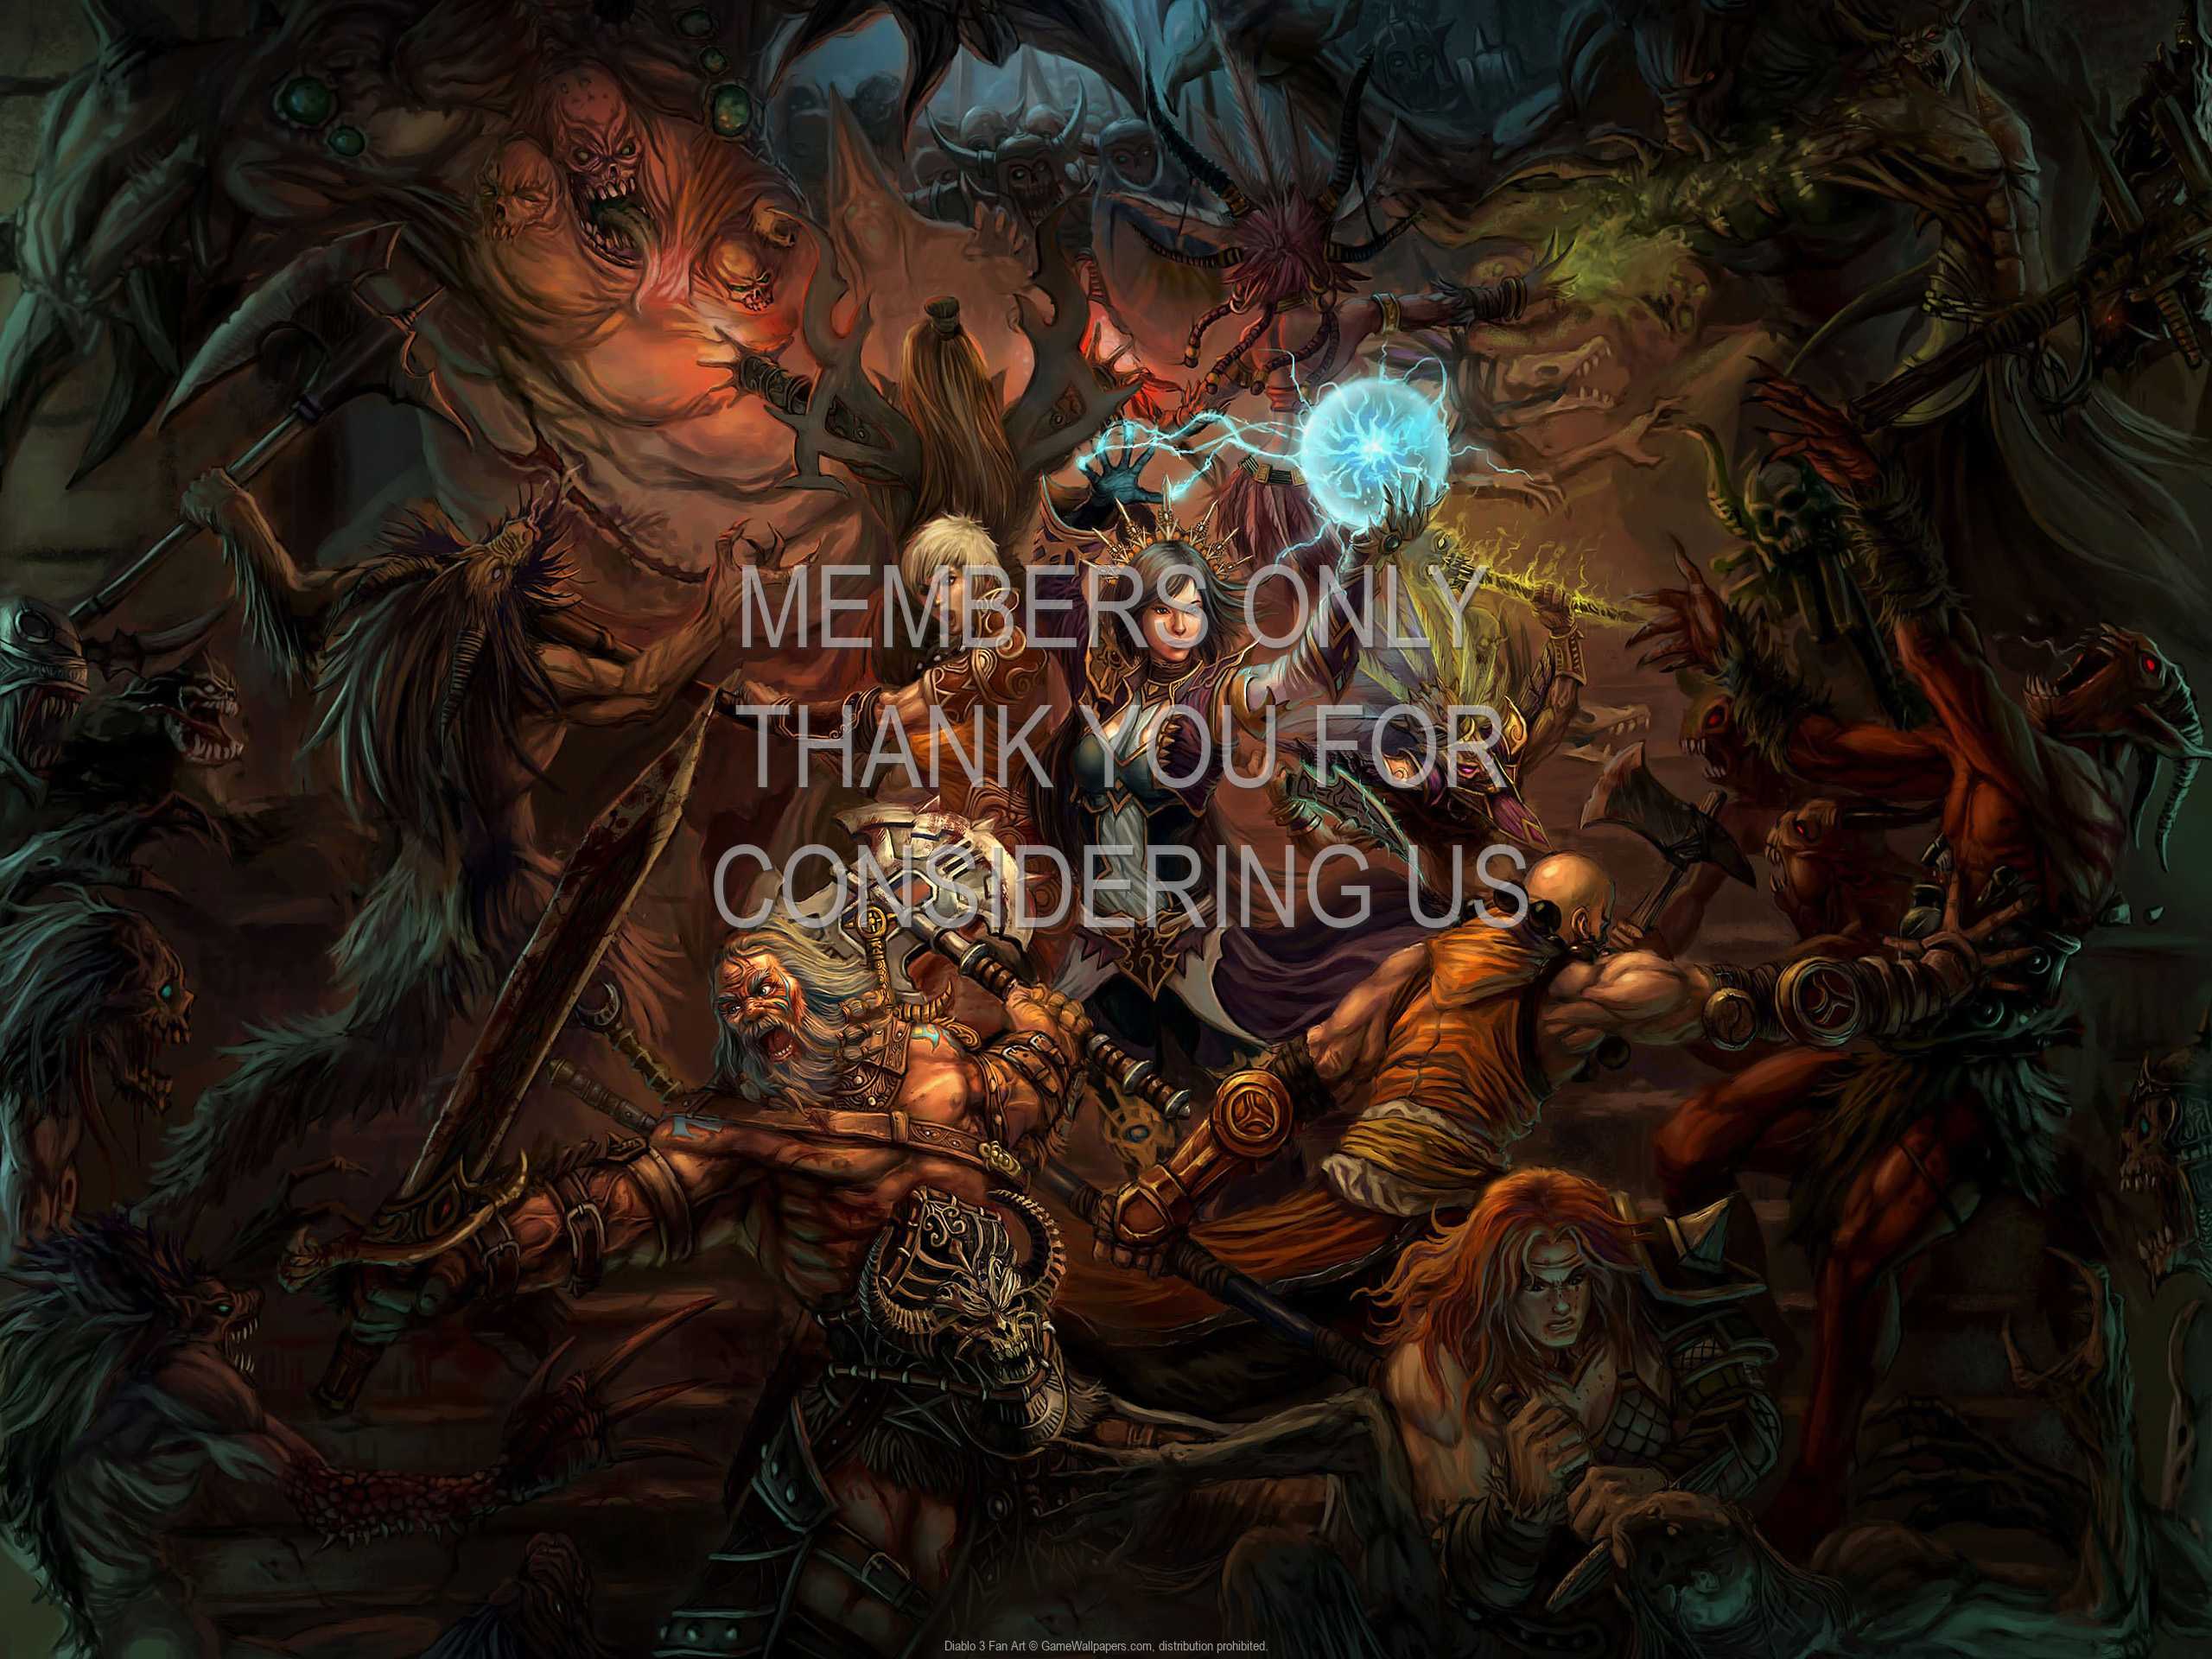 Diablo 3 Fan Art 1080p%20Horizontal Mobile wallpaper or background 04